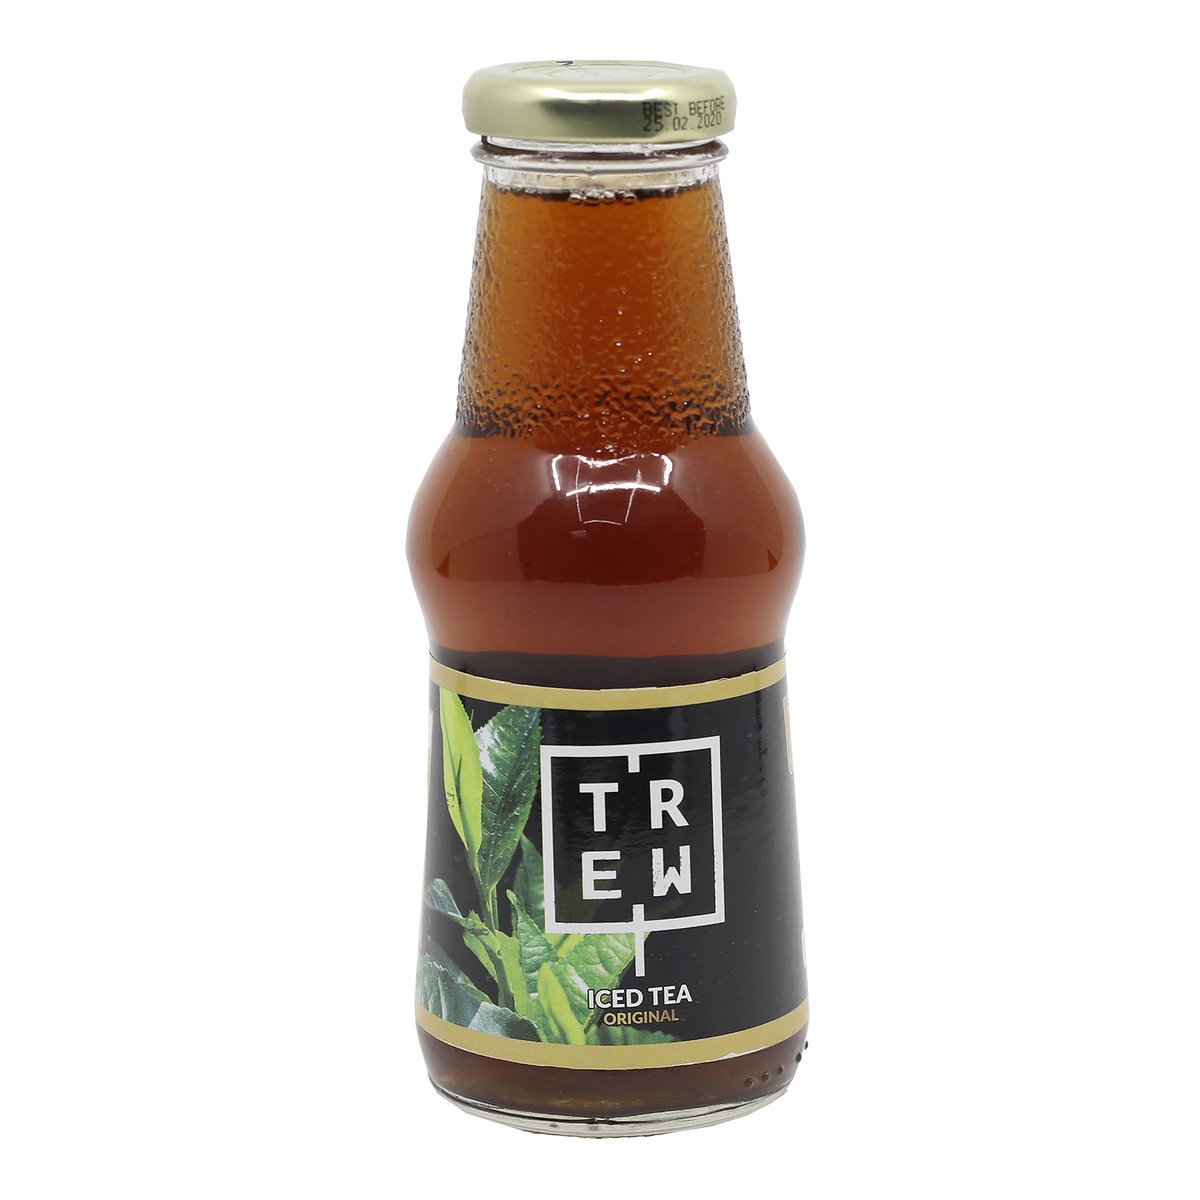 Trew Iced Tea Original 240ml